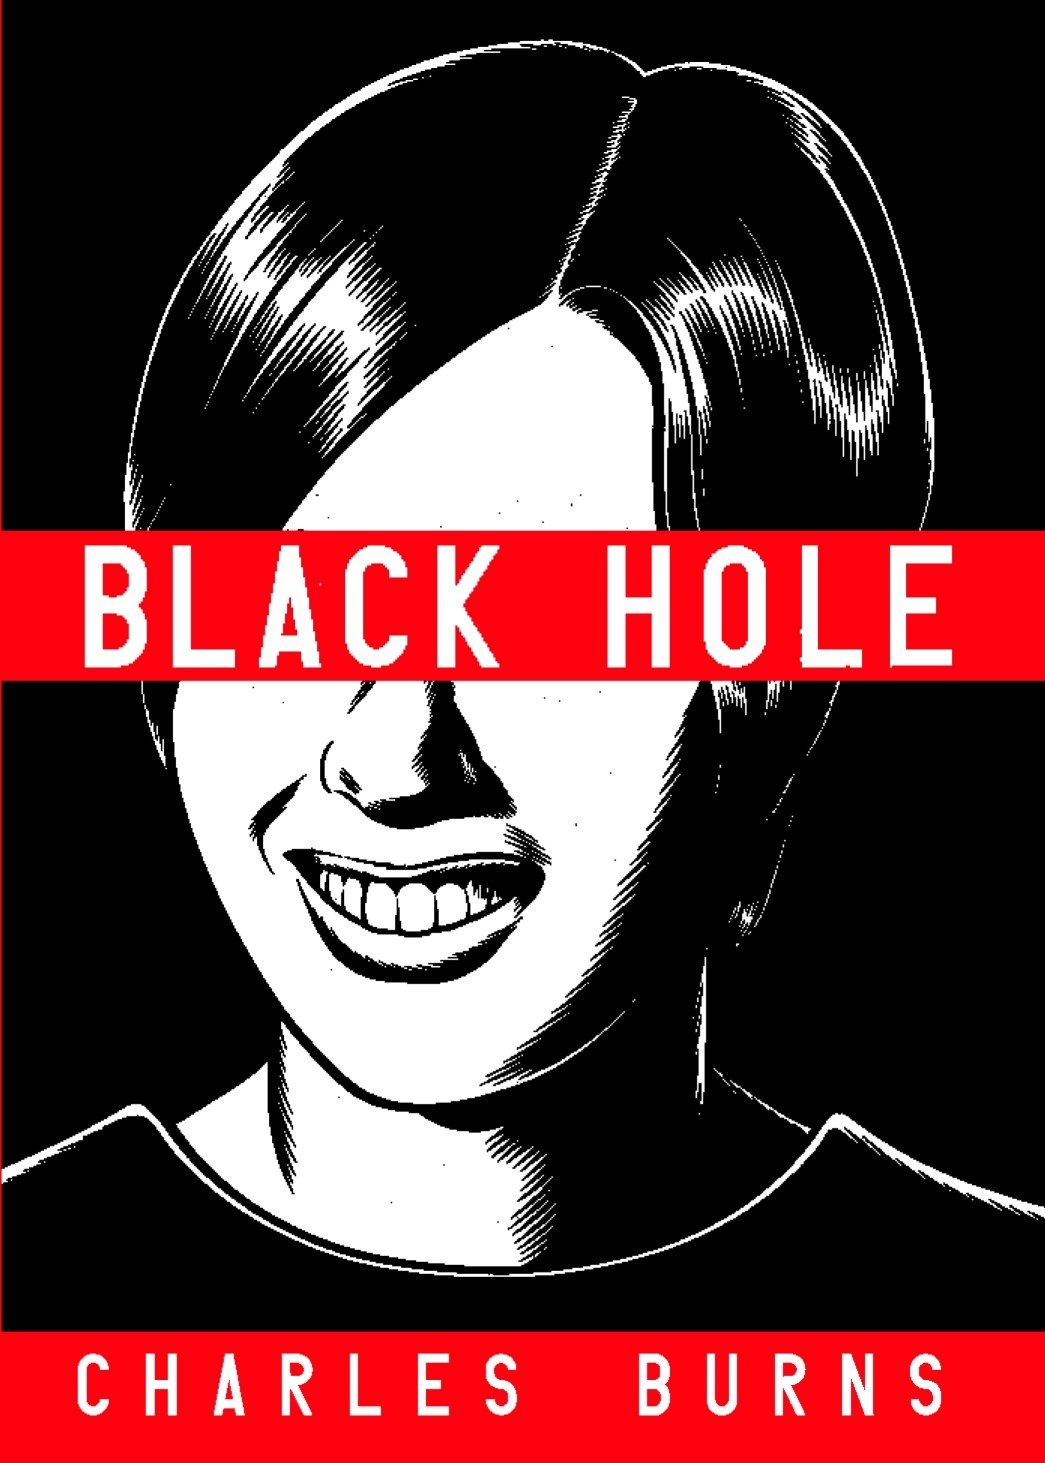 “Black Hole” by Charles Burns (2005)